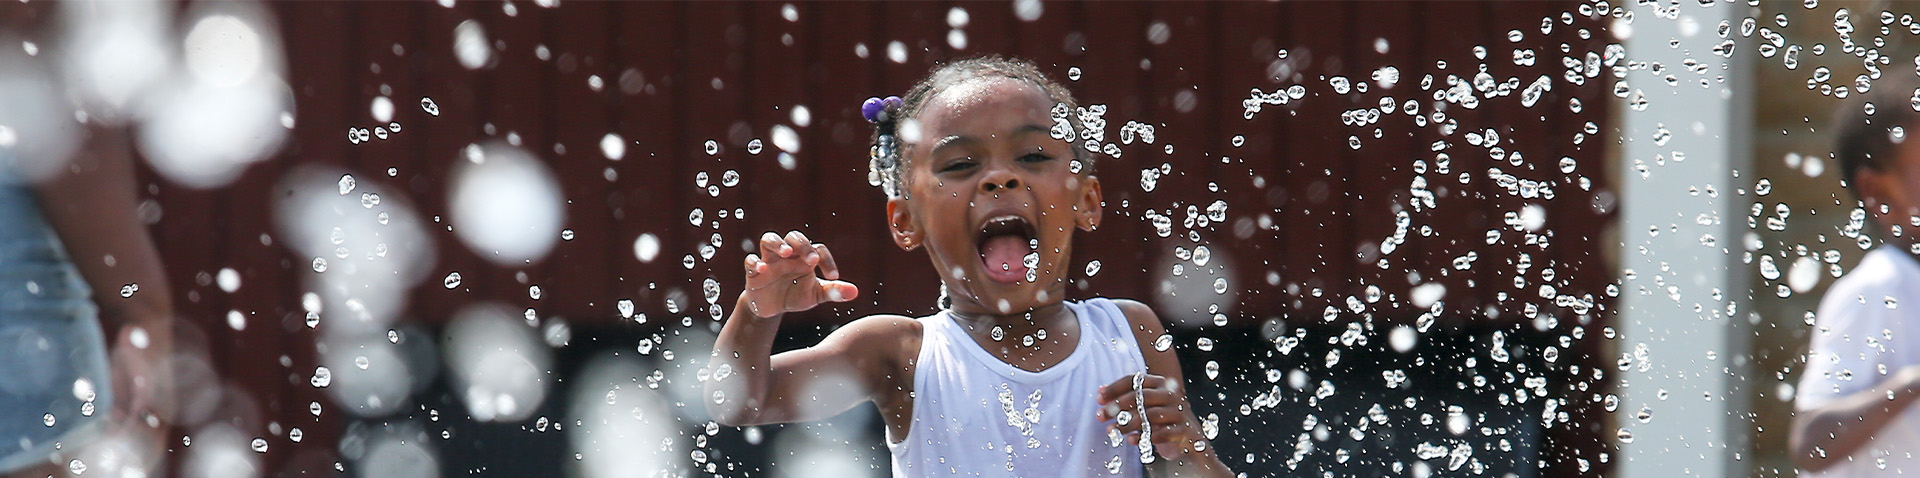 a little girl having fun in the splash pad